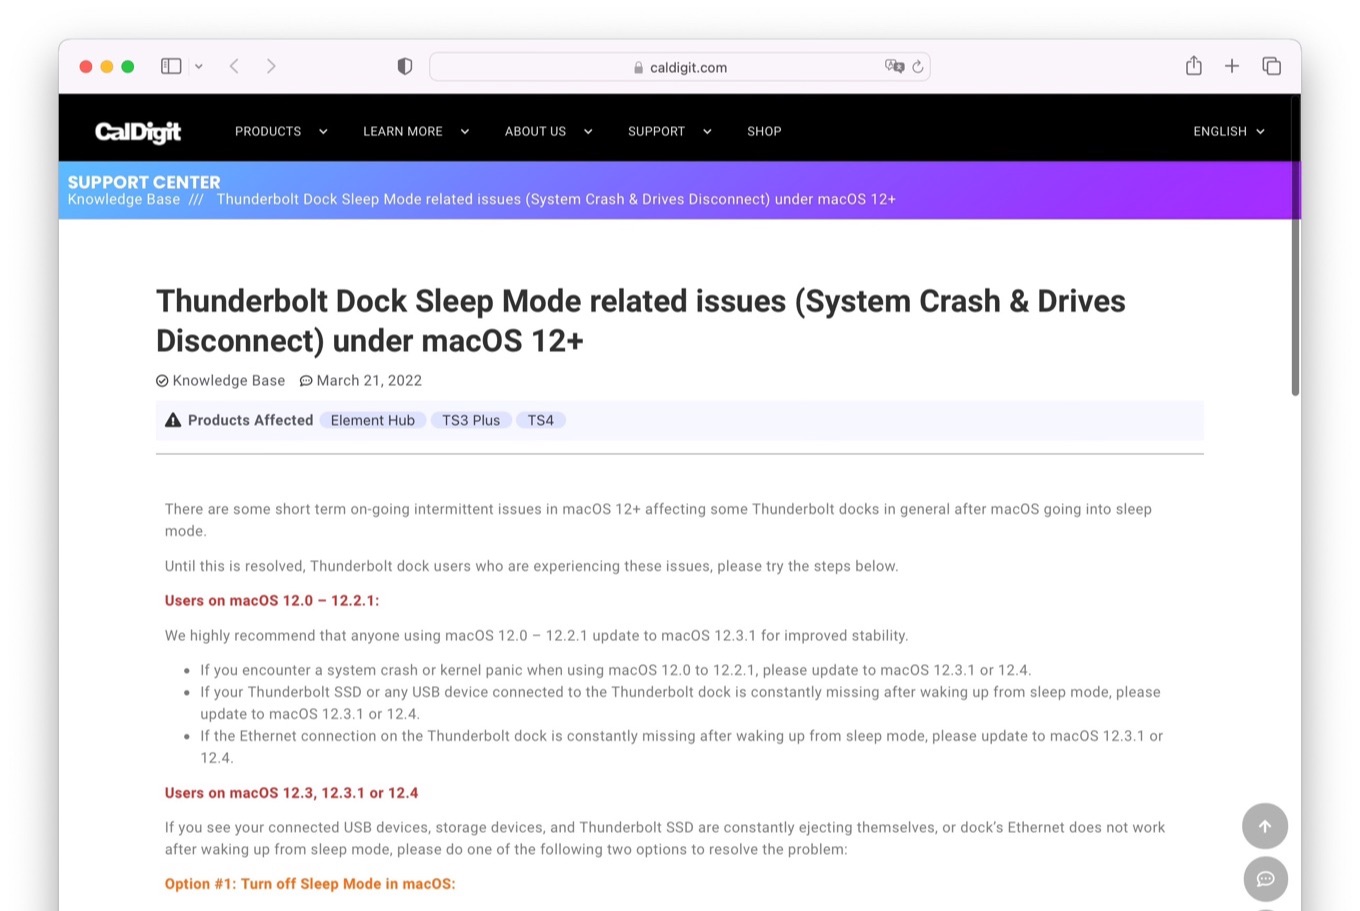 Thunderbolt Dock Sleep Mode related issues under macOS 12+